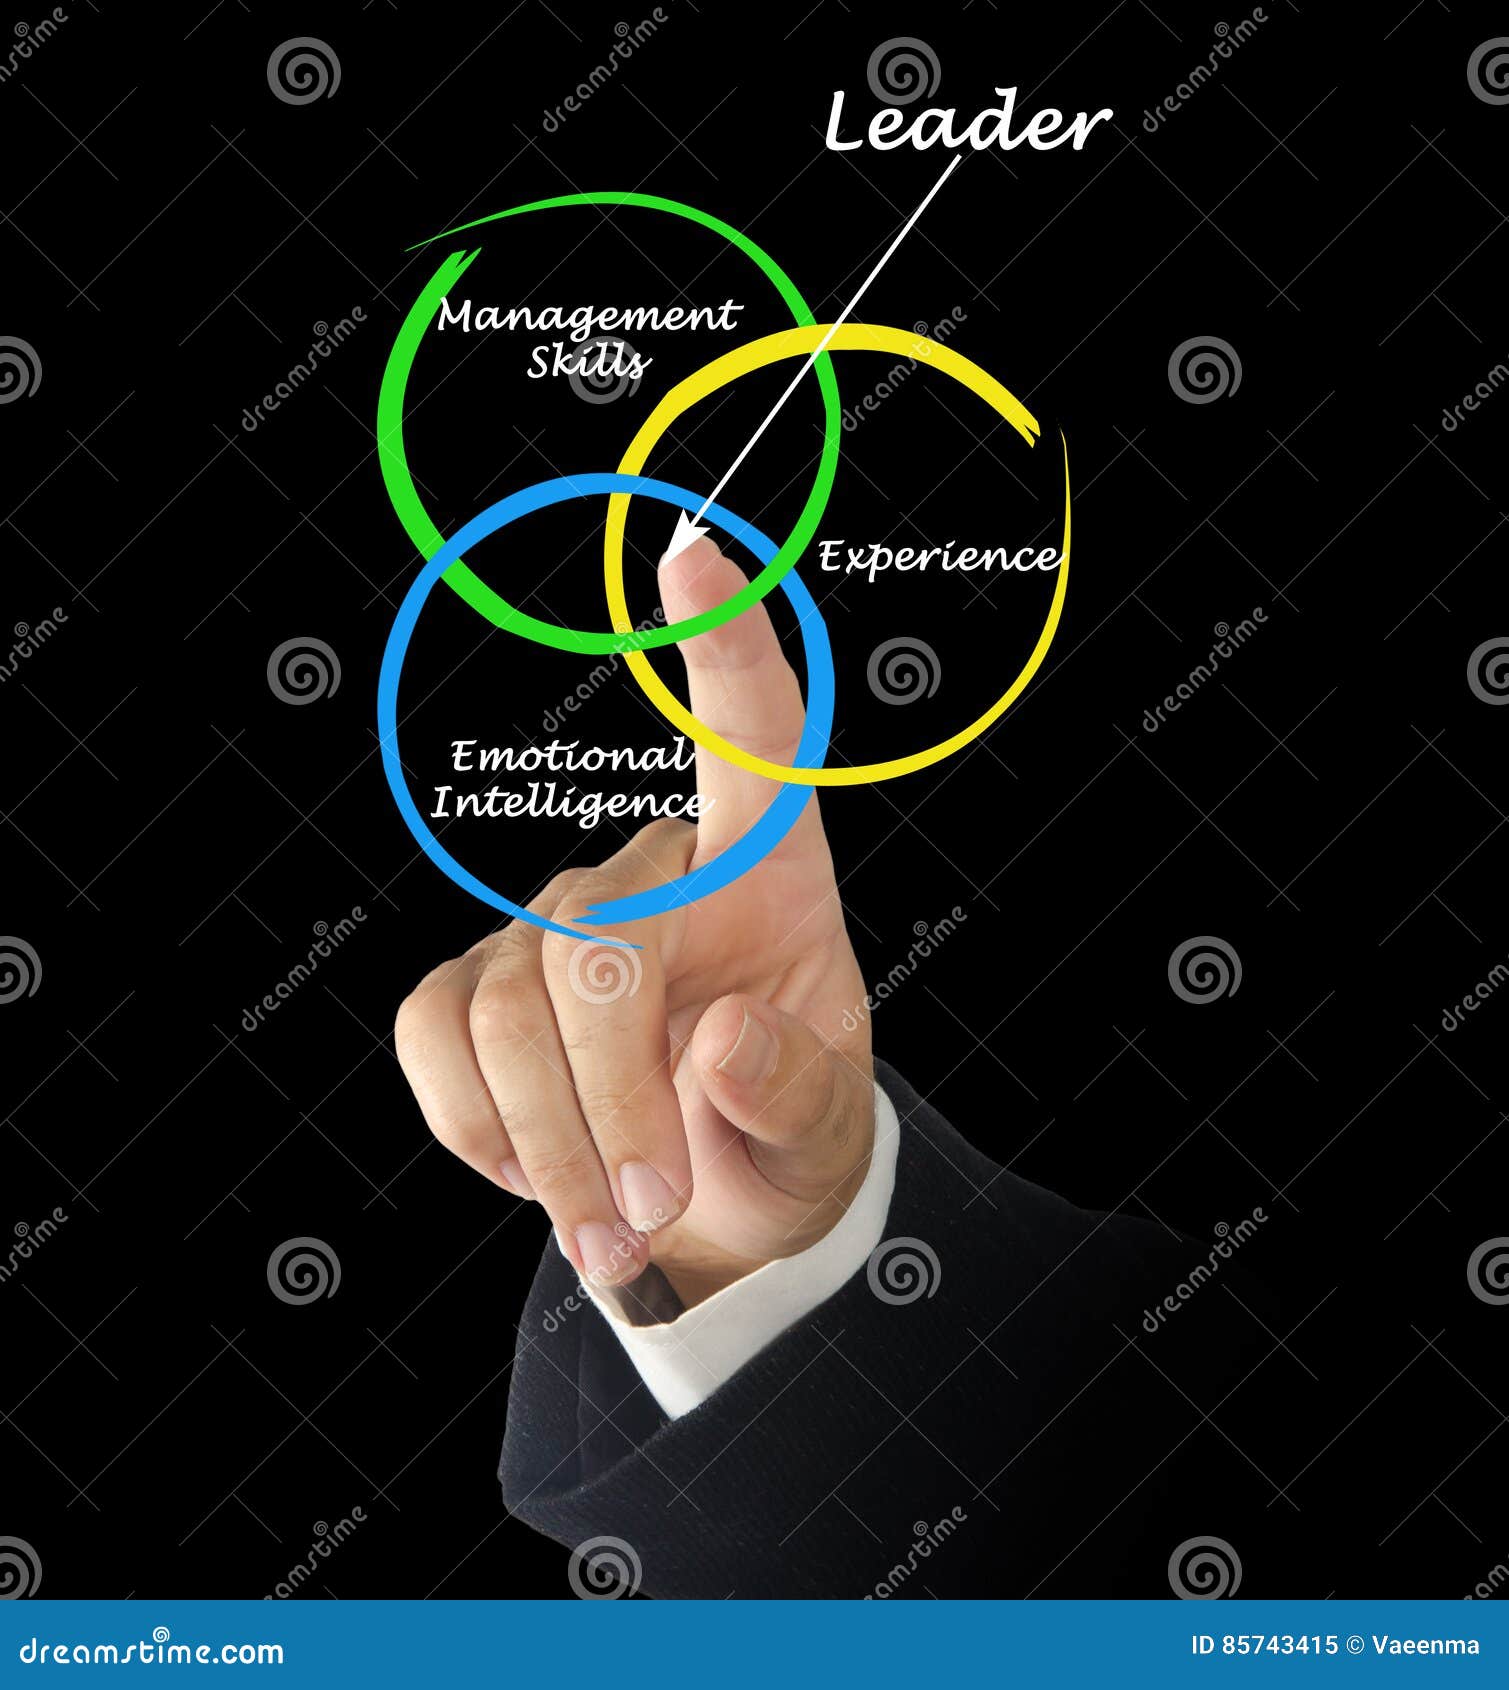 leader qualities